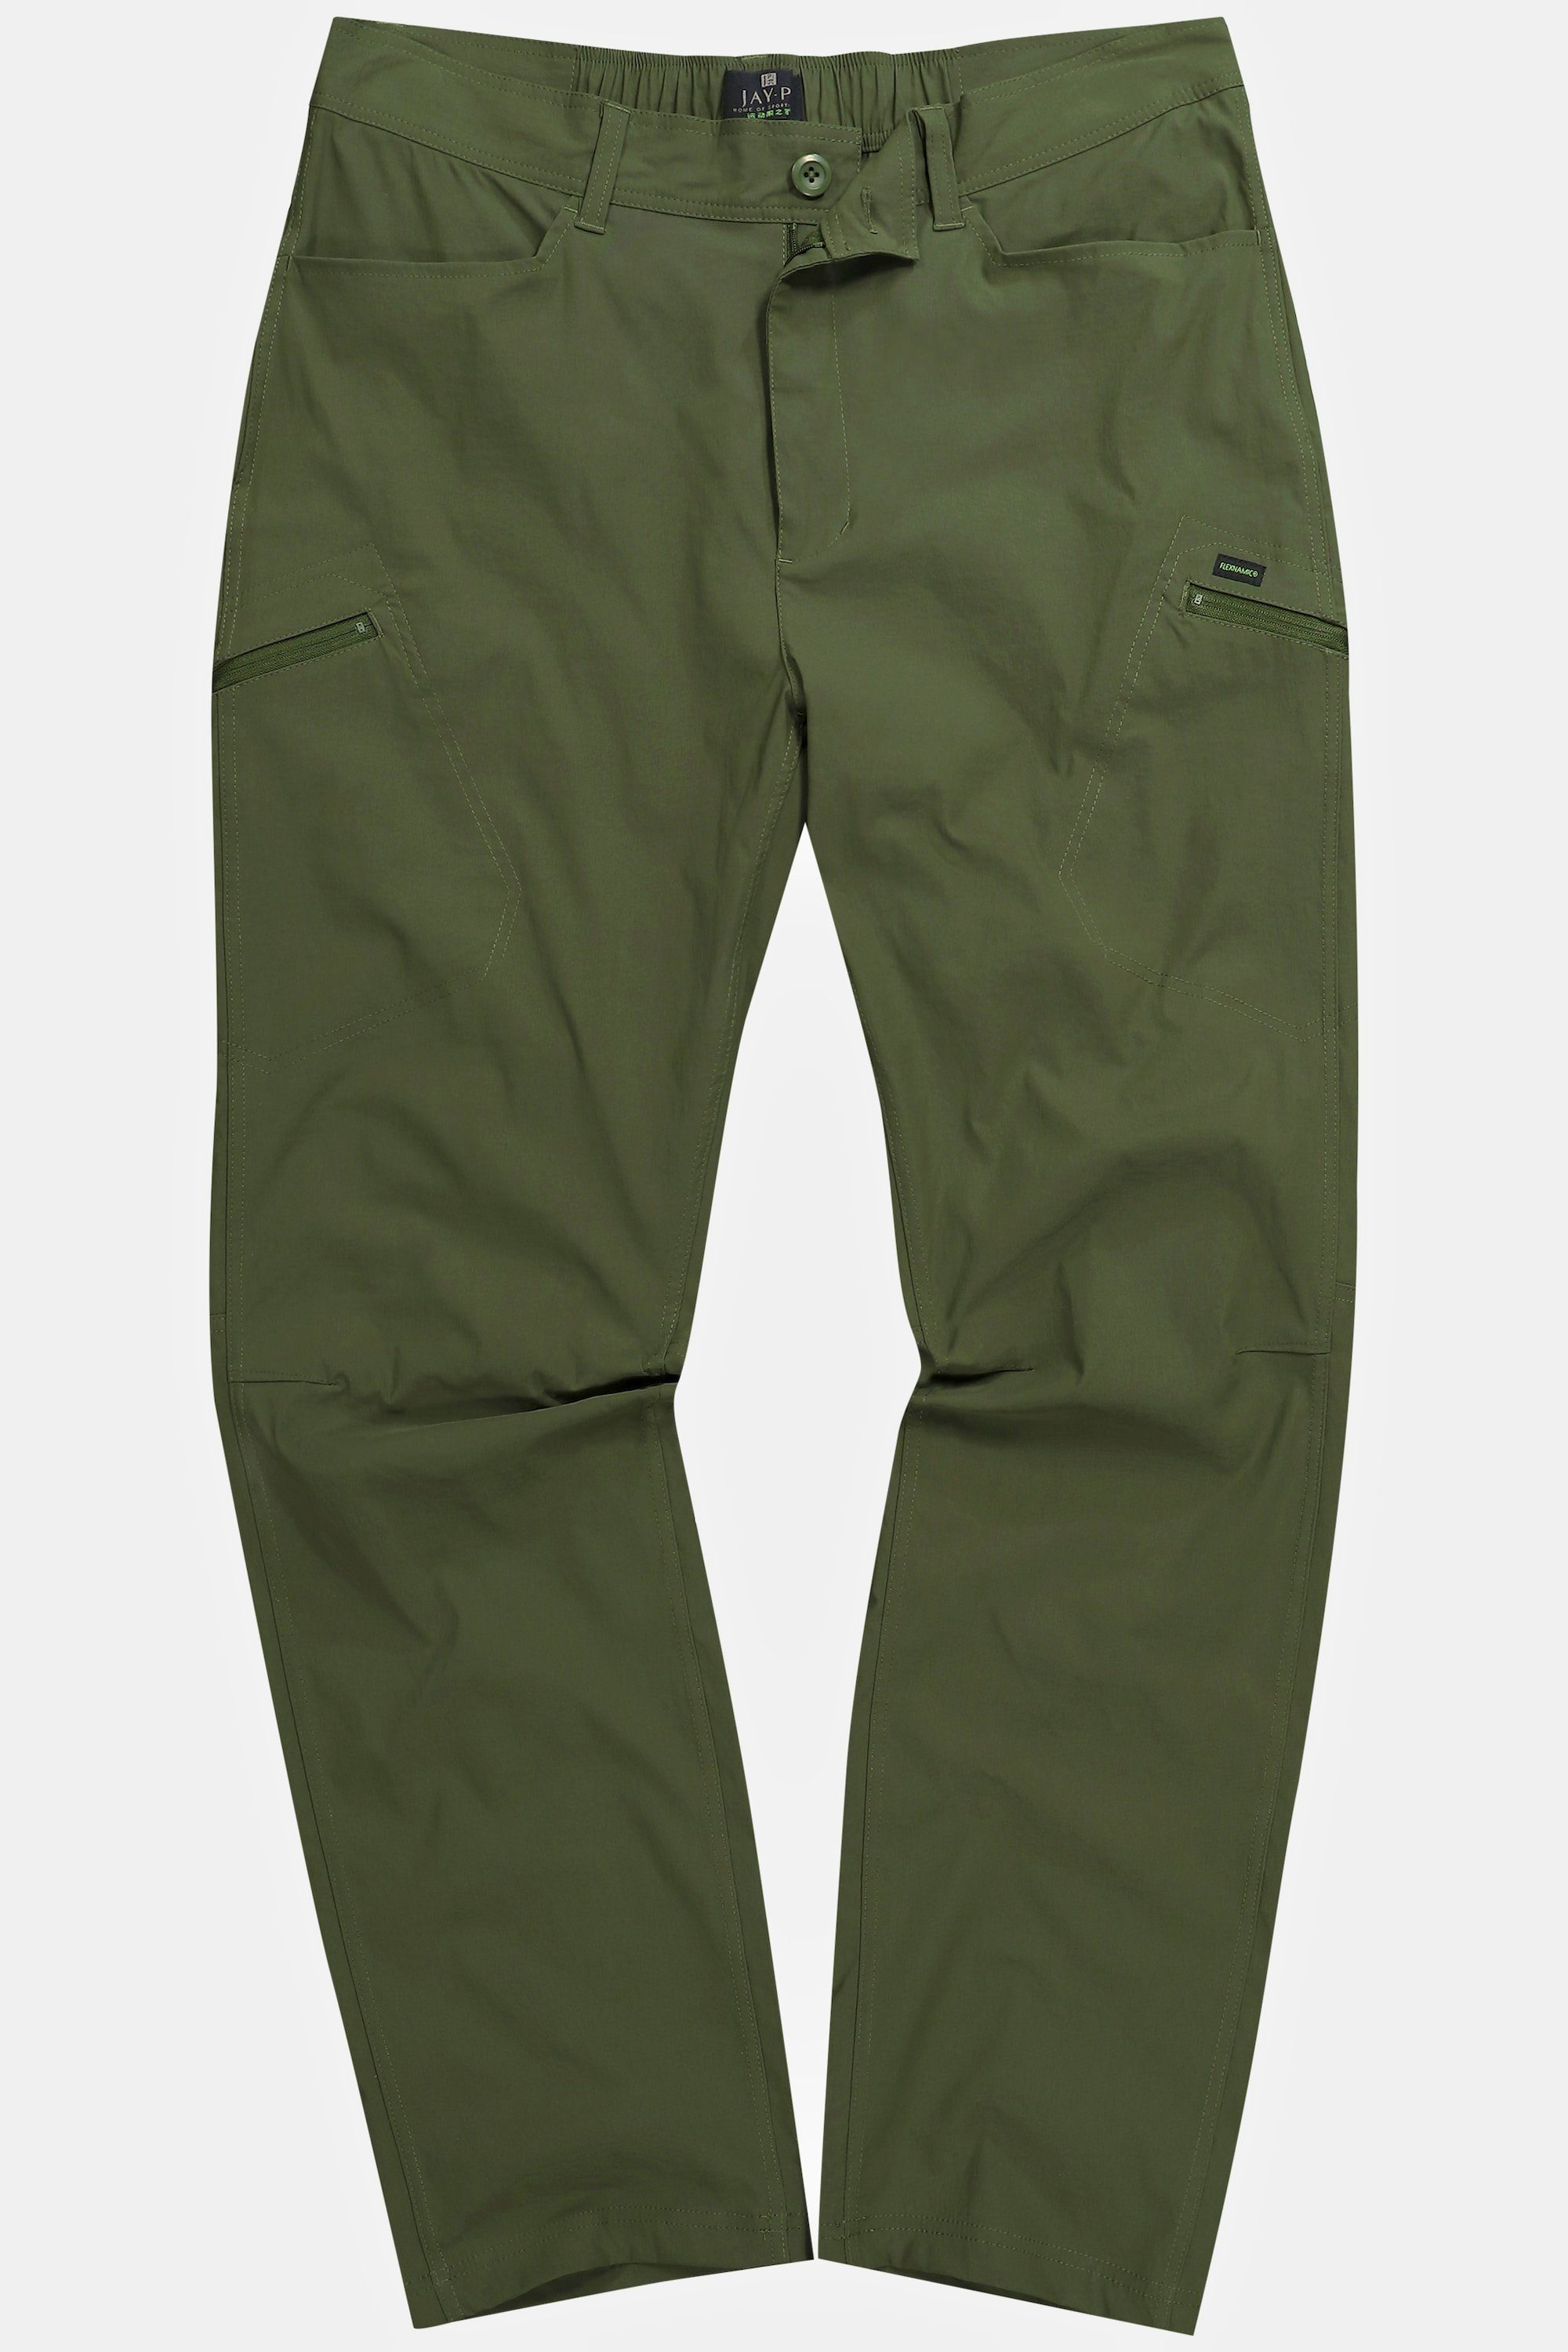 JP1880 5-Pocket-Jeans FLEXNAMIC® Trekking-Hose QuickDry Outdoor